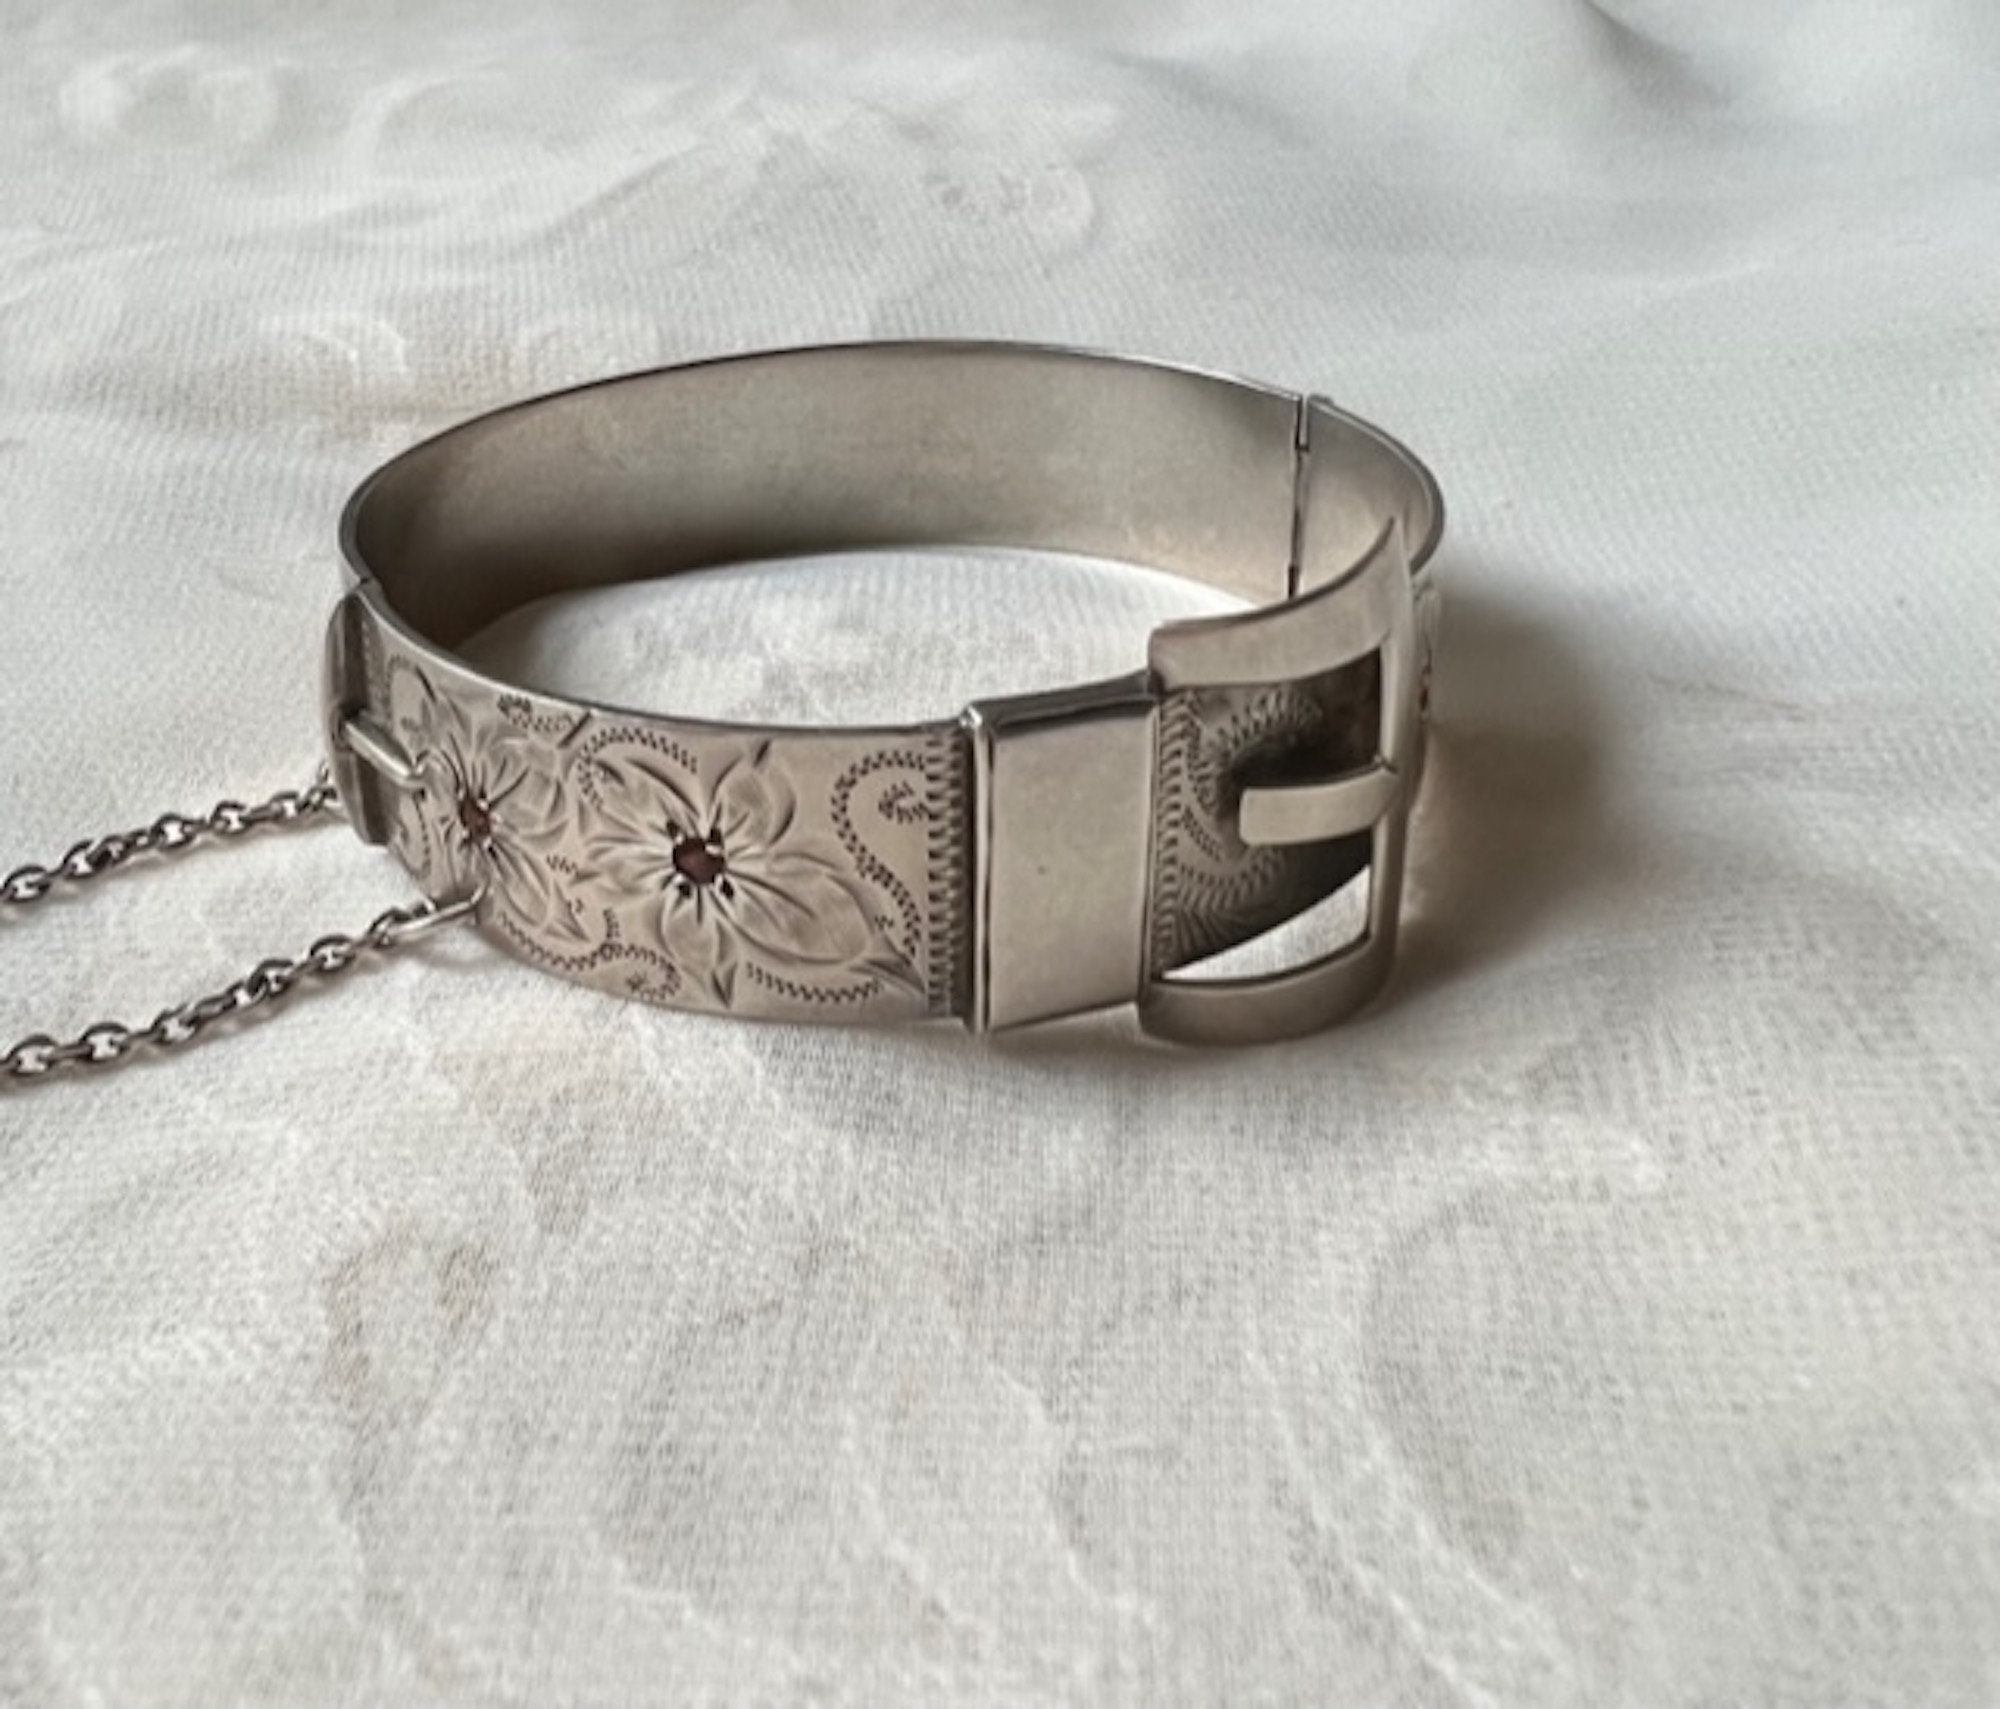 Antique Victorian Wide Silver Engraved Buckle Bangle Bracelet - Ruby Lane